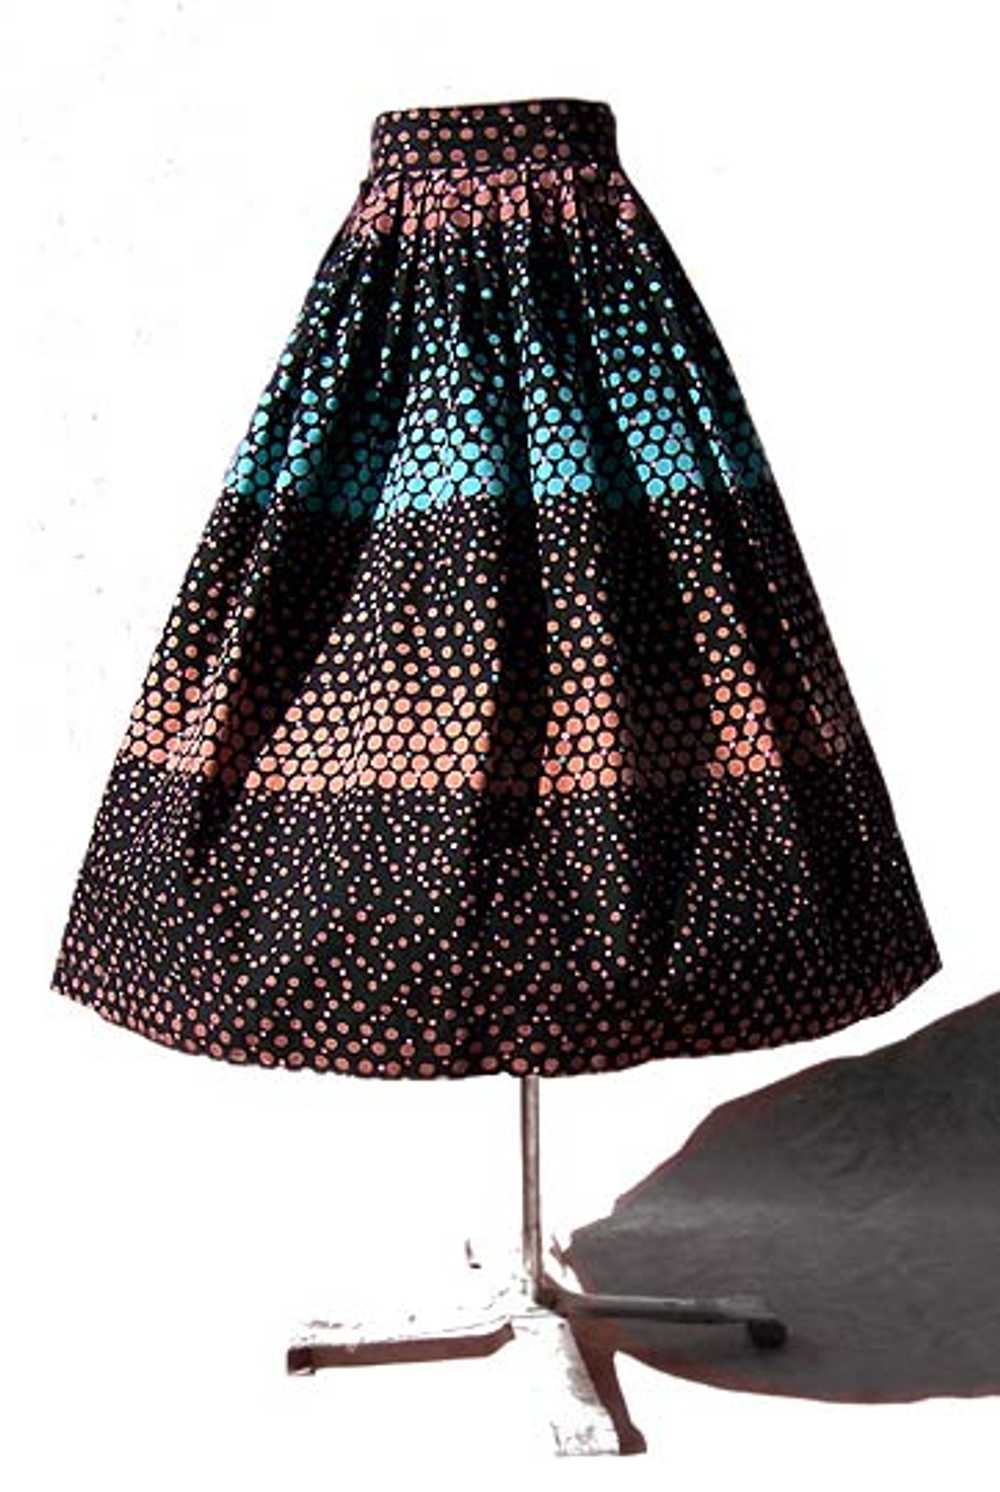 Atomic polka-dot skirt - image 1